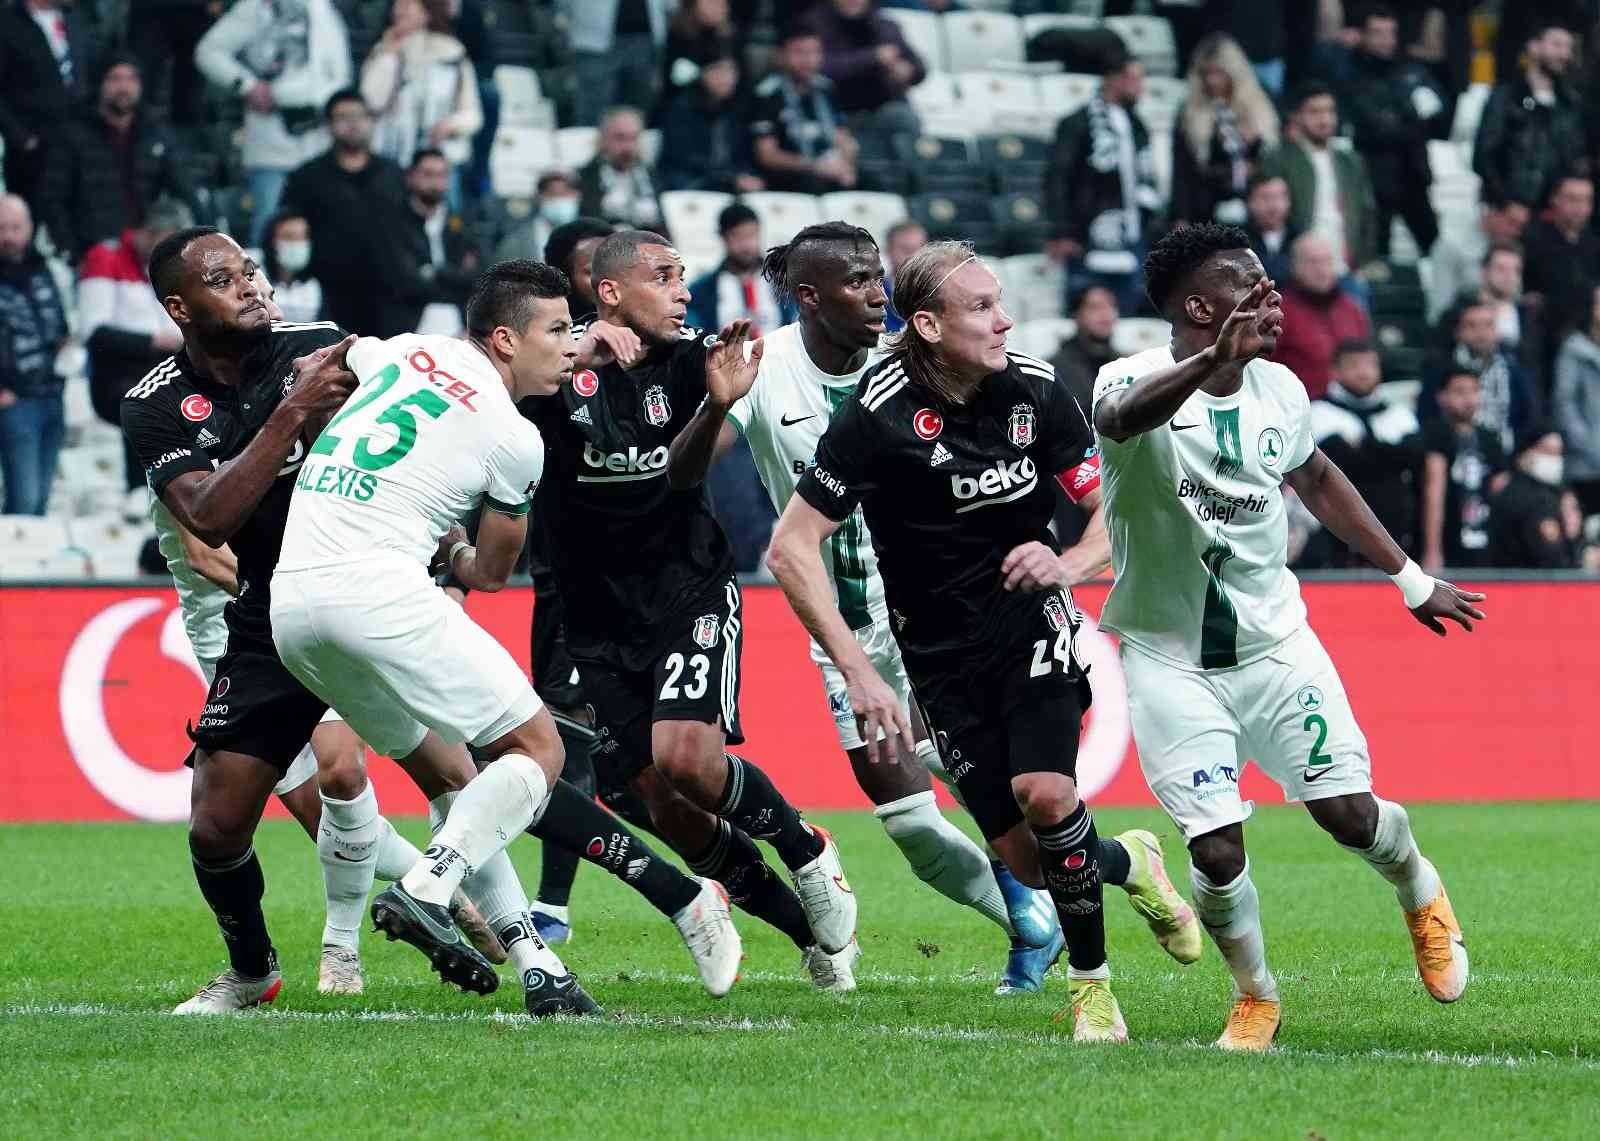 Spor Toto Süper Lig: Beşiktaş: 0 - GZT Giresunspor: 4 (Maç sonucu)